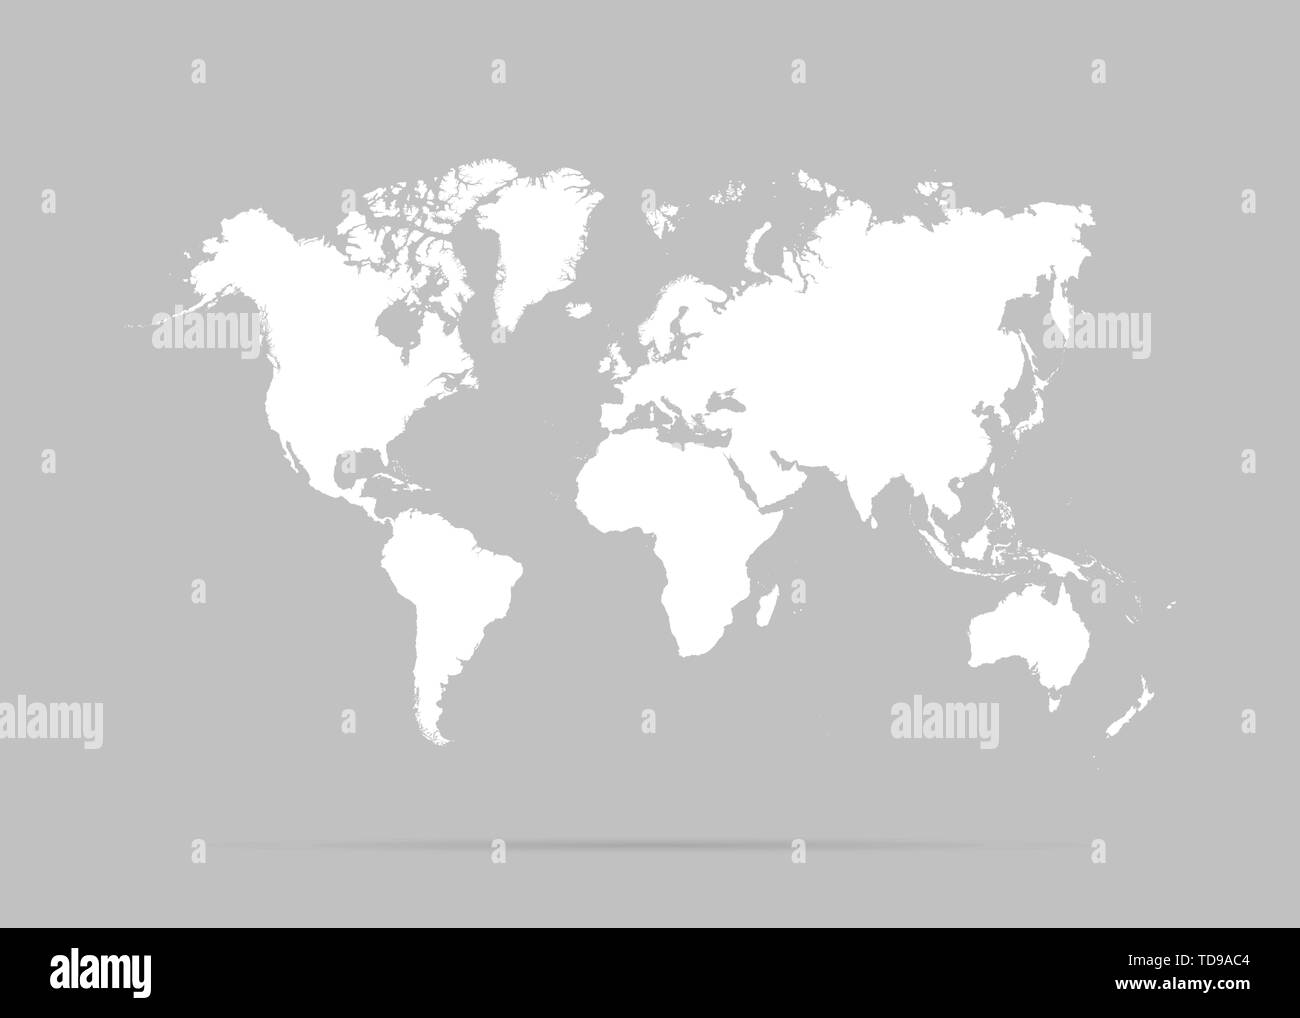 Weltkarte mit Schatten. Vector EPS 10 Abbildung Stock Vektor